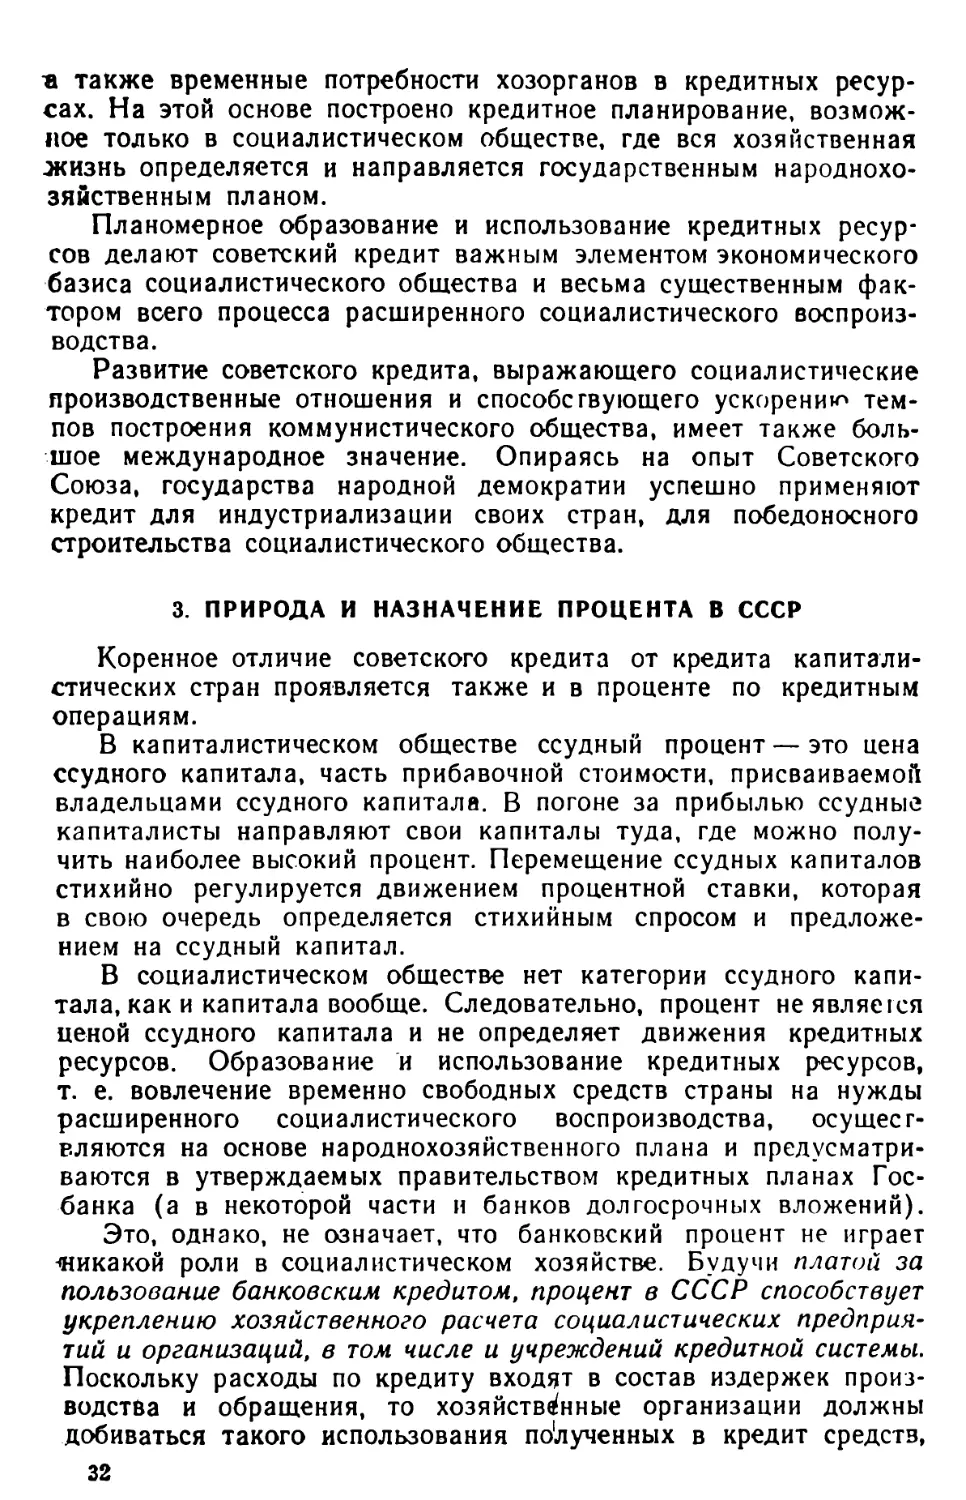 3. Природа и назначение процента в СССР